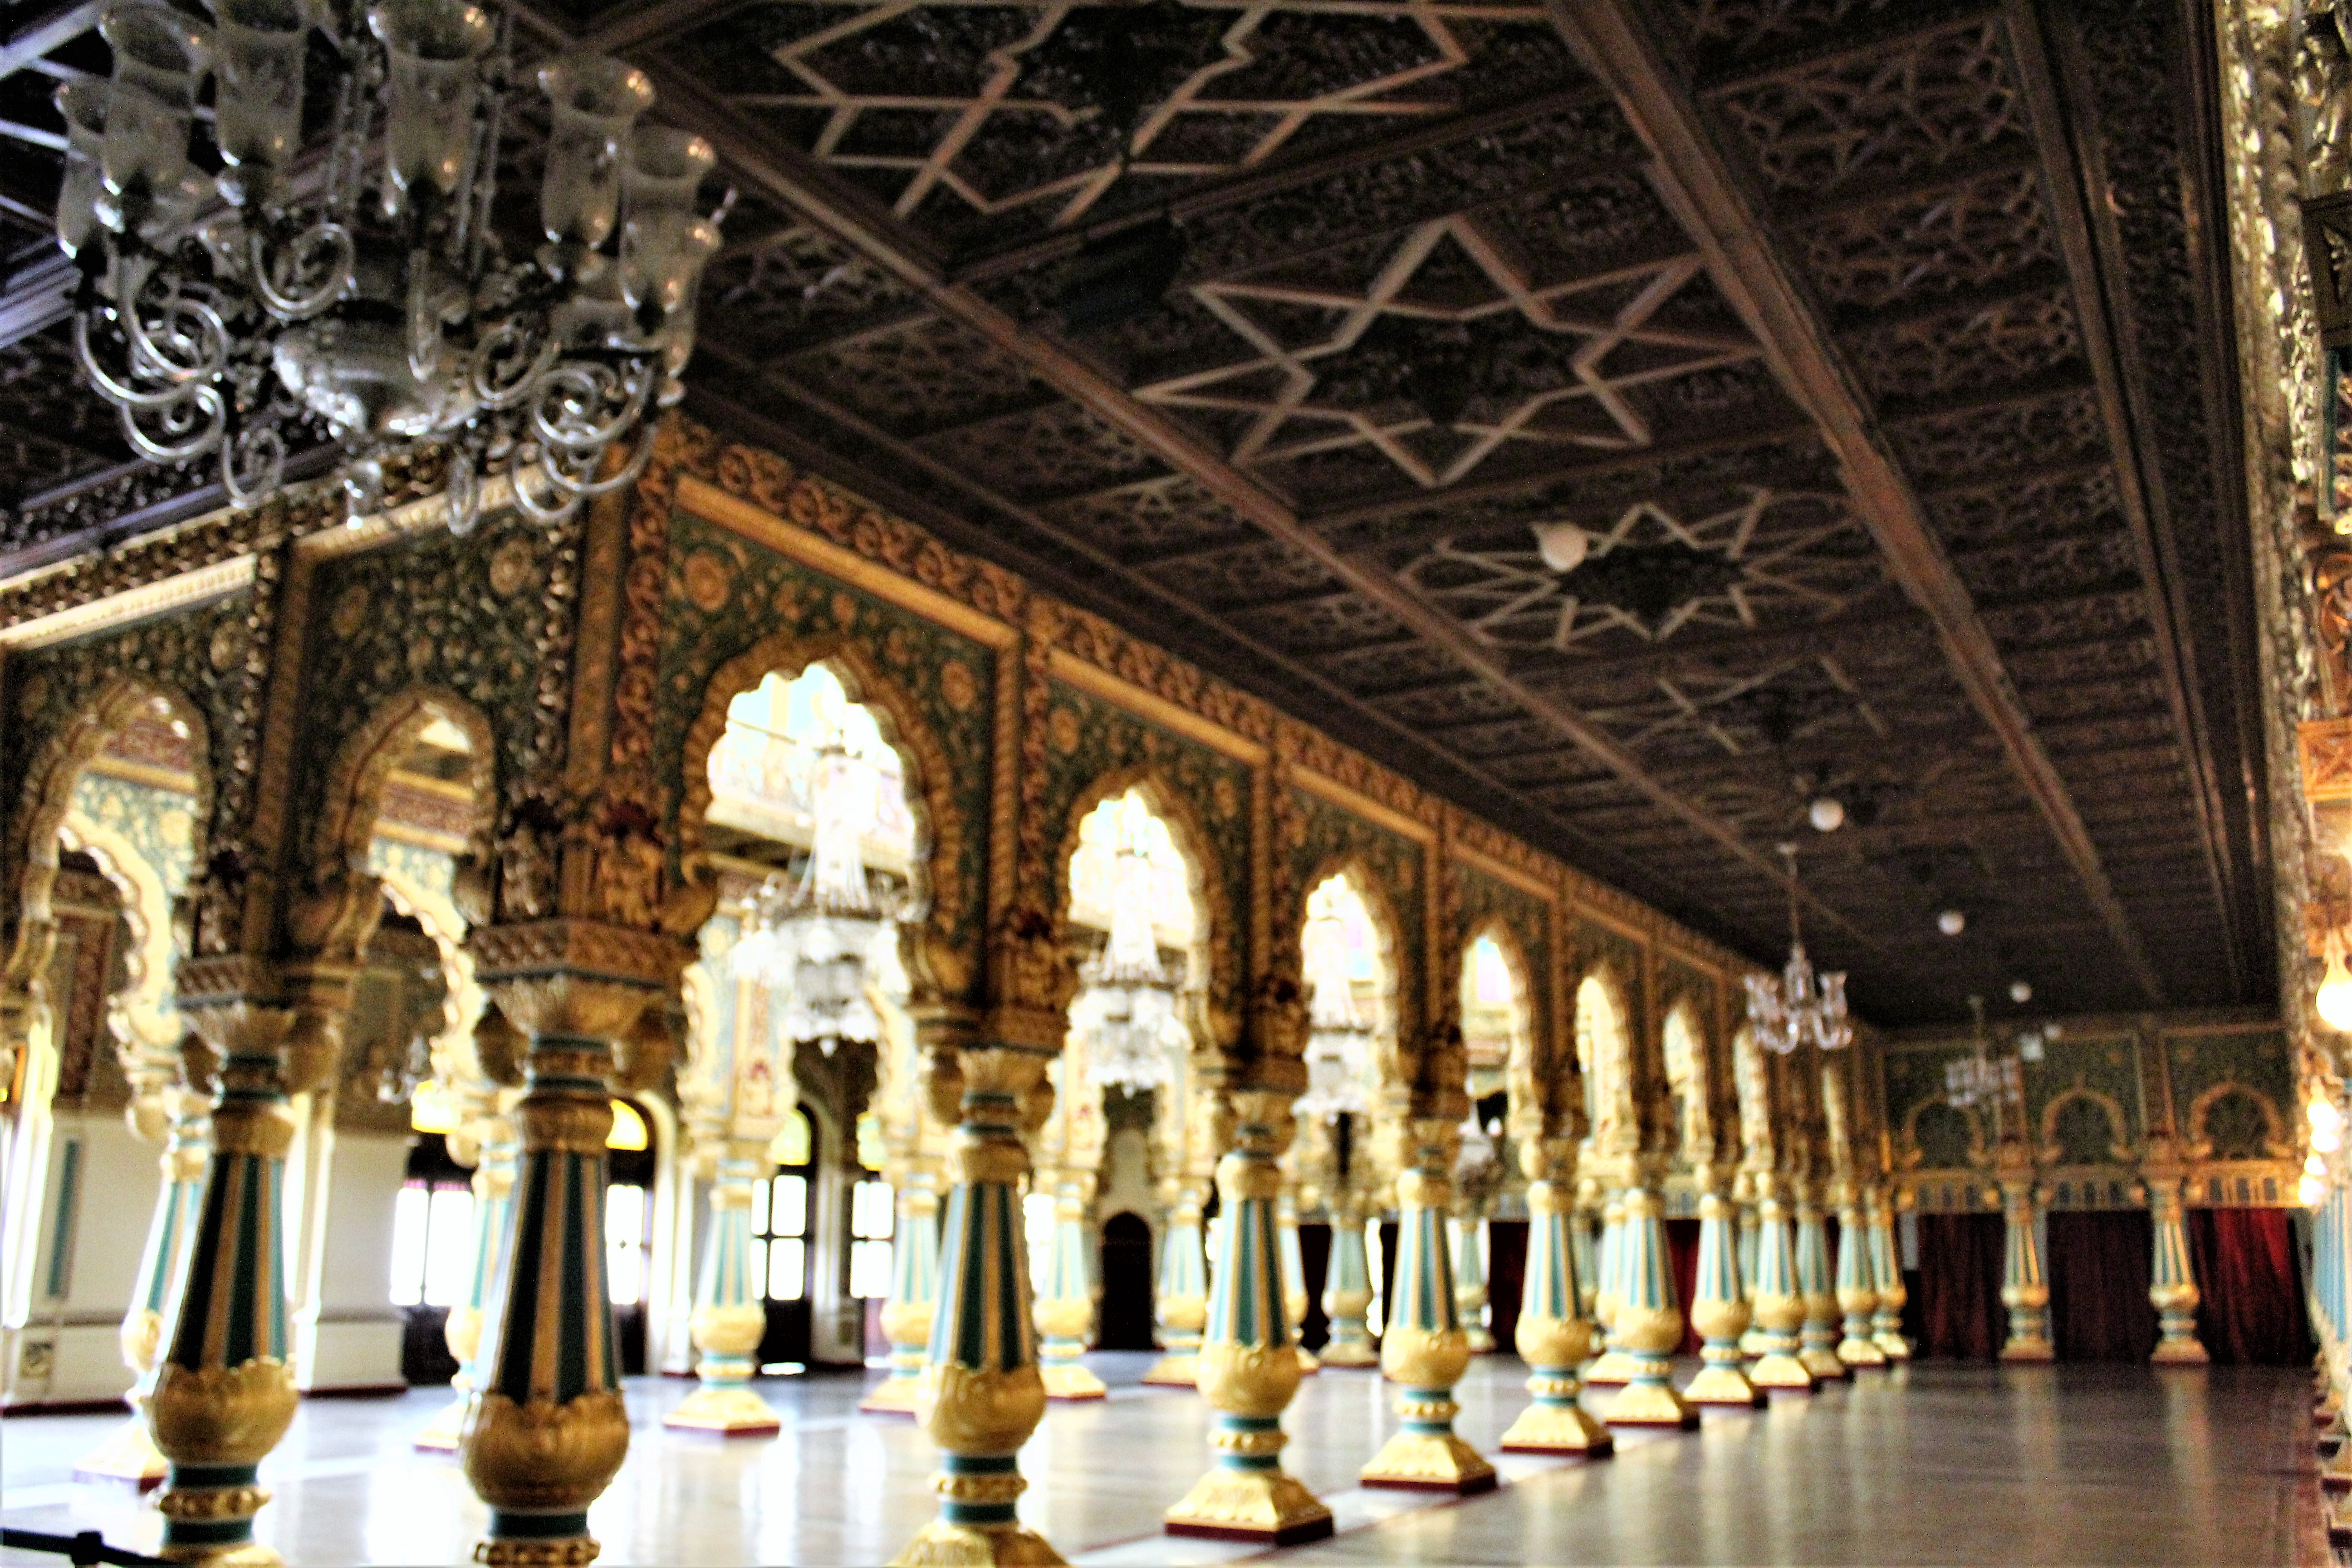 Inside the Mysore Palace